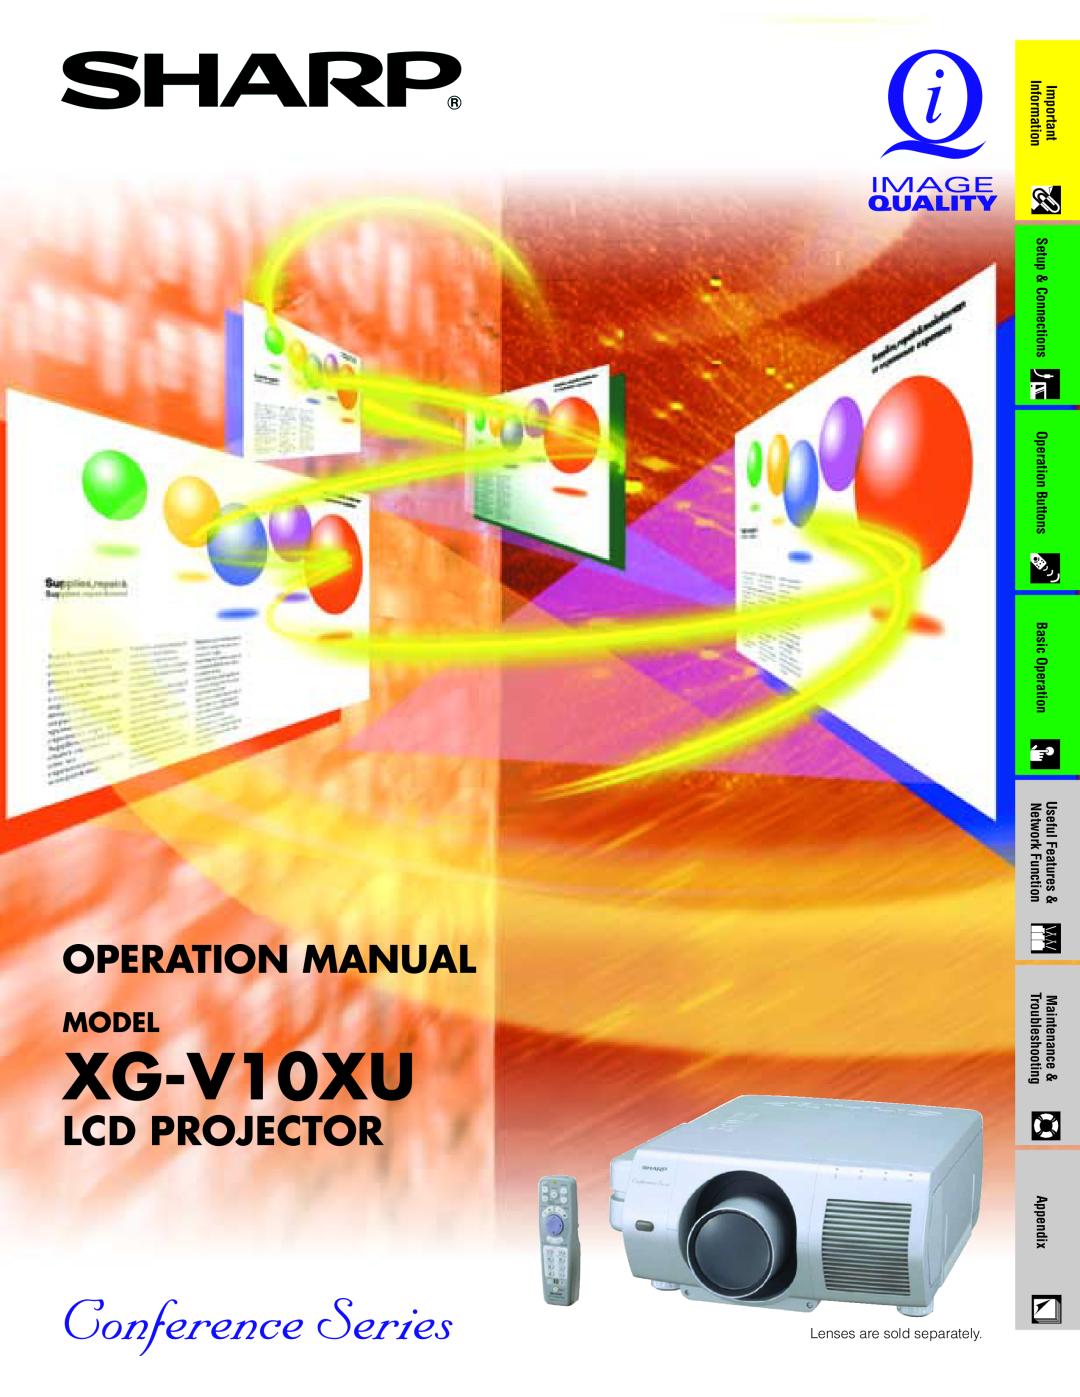 Sharp XG-V10XU operation manual Lcd Projector, Operation Manual, Model, Setup, Maintenance, Information, NetworkFunction 